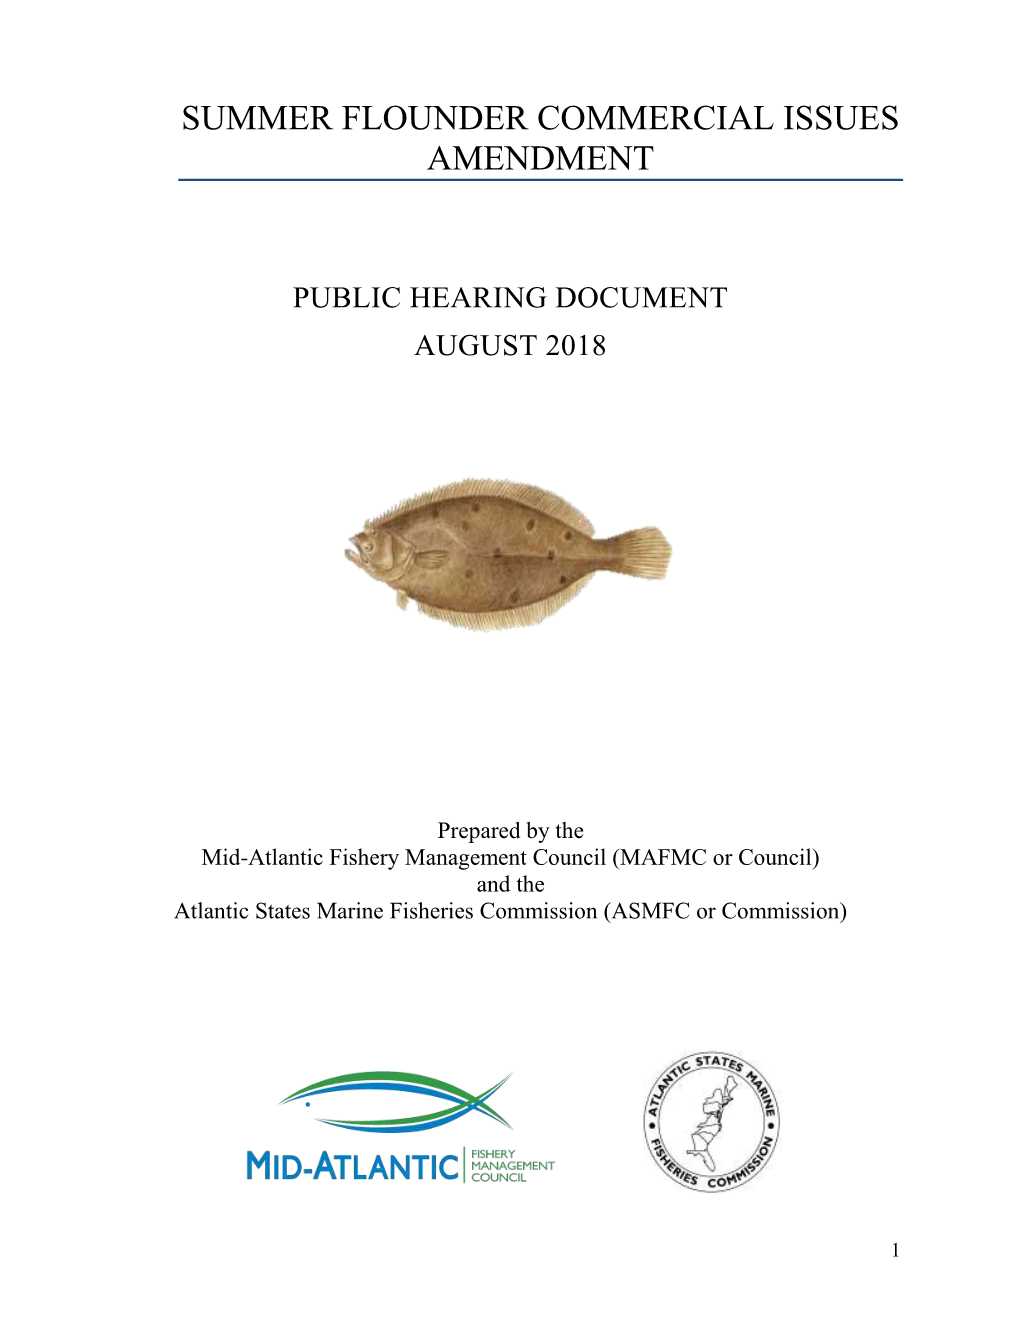 Summer Flounder Commercial Issues Amendment